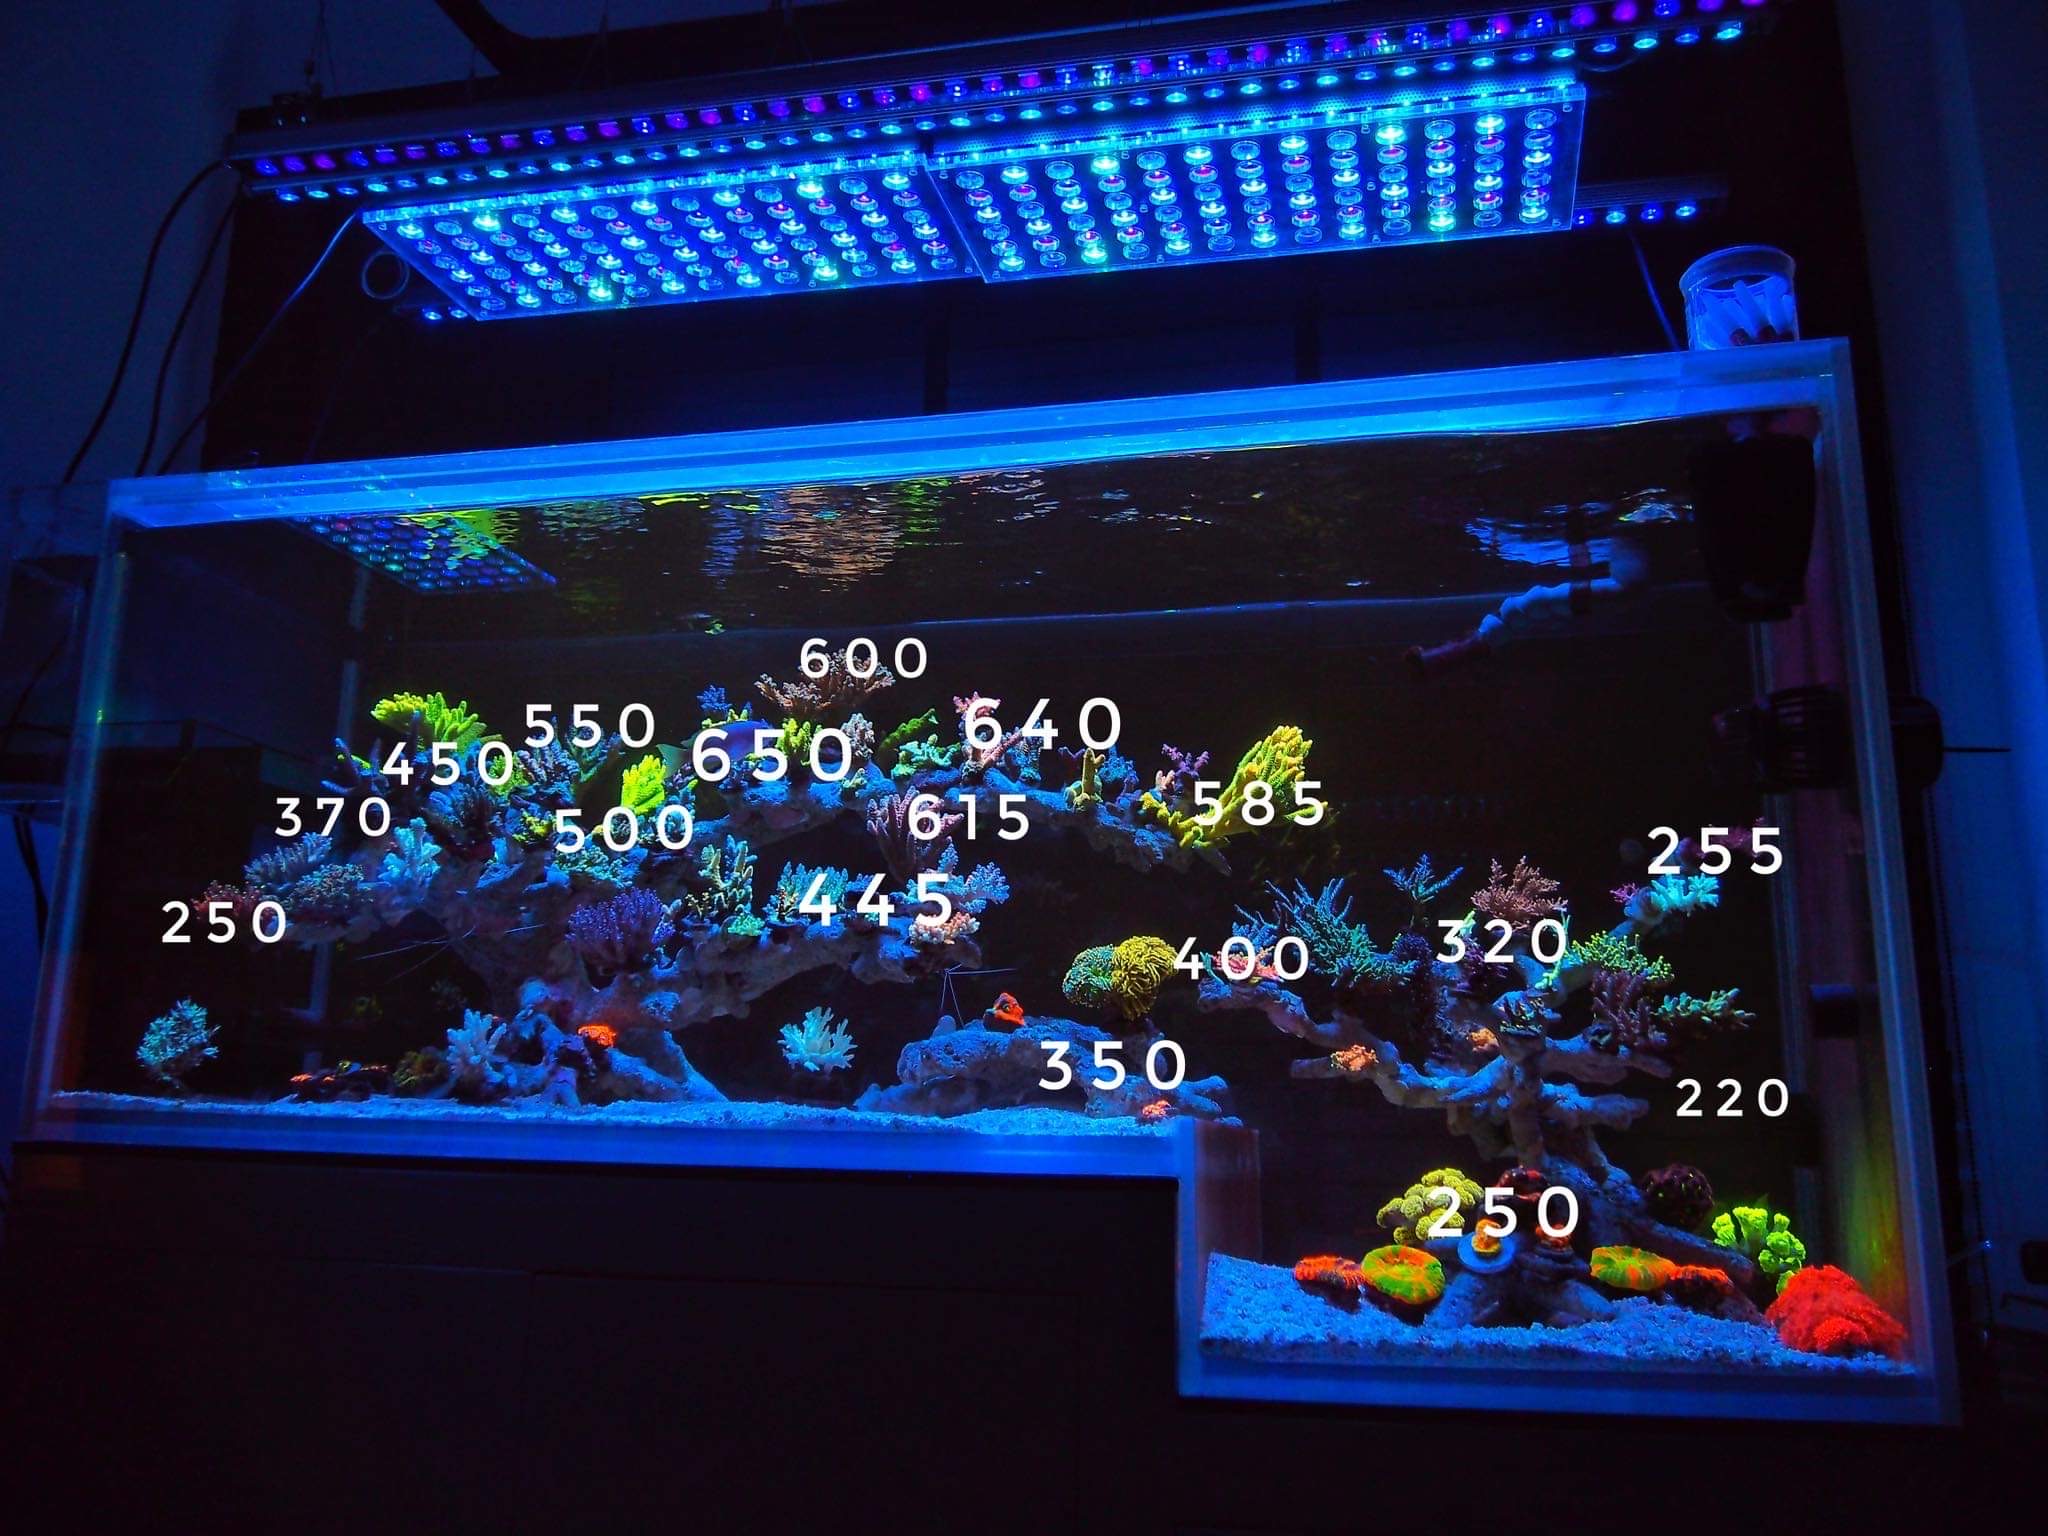 Atlantik icon or3 150 led bar reef aquarium